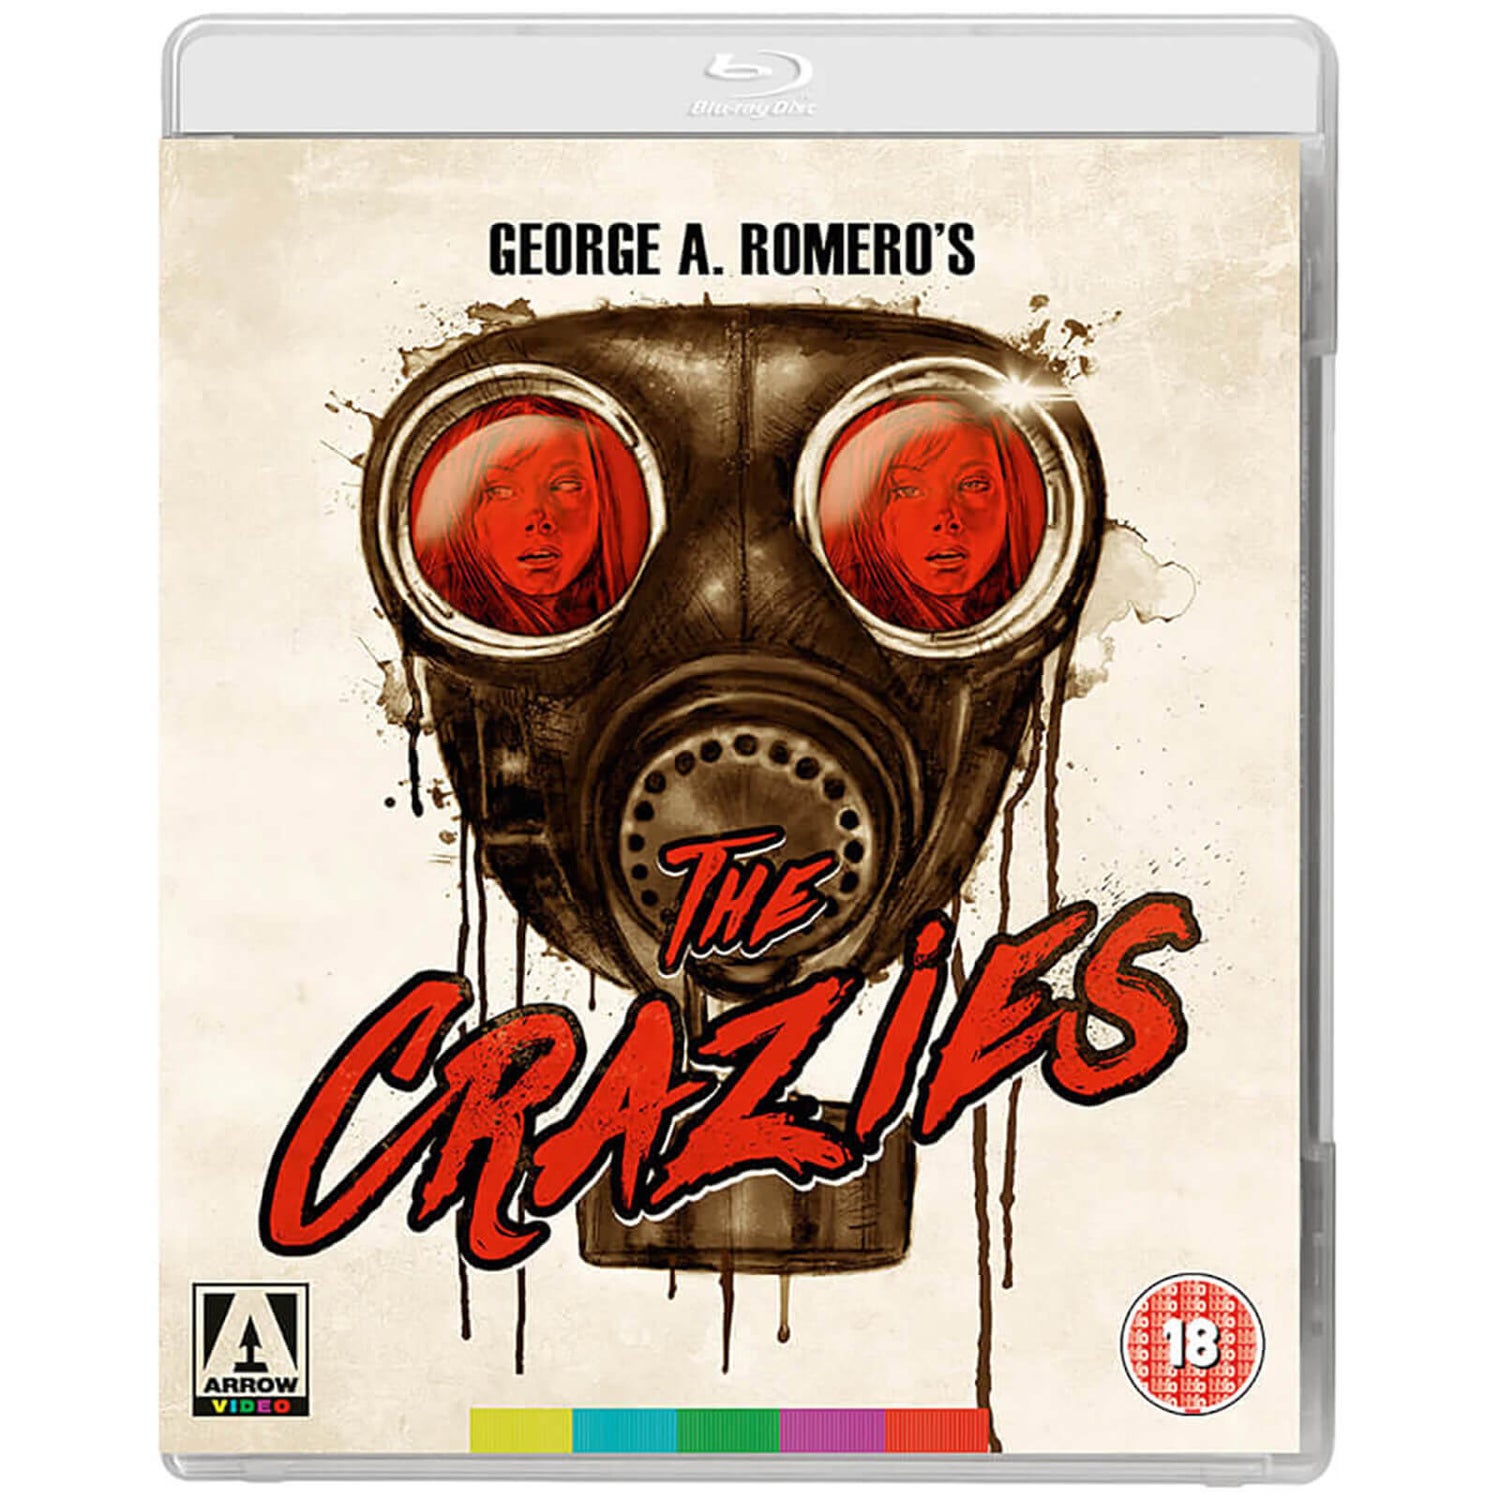 The Crazies Blu-ray